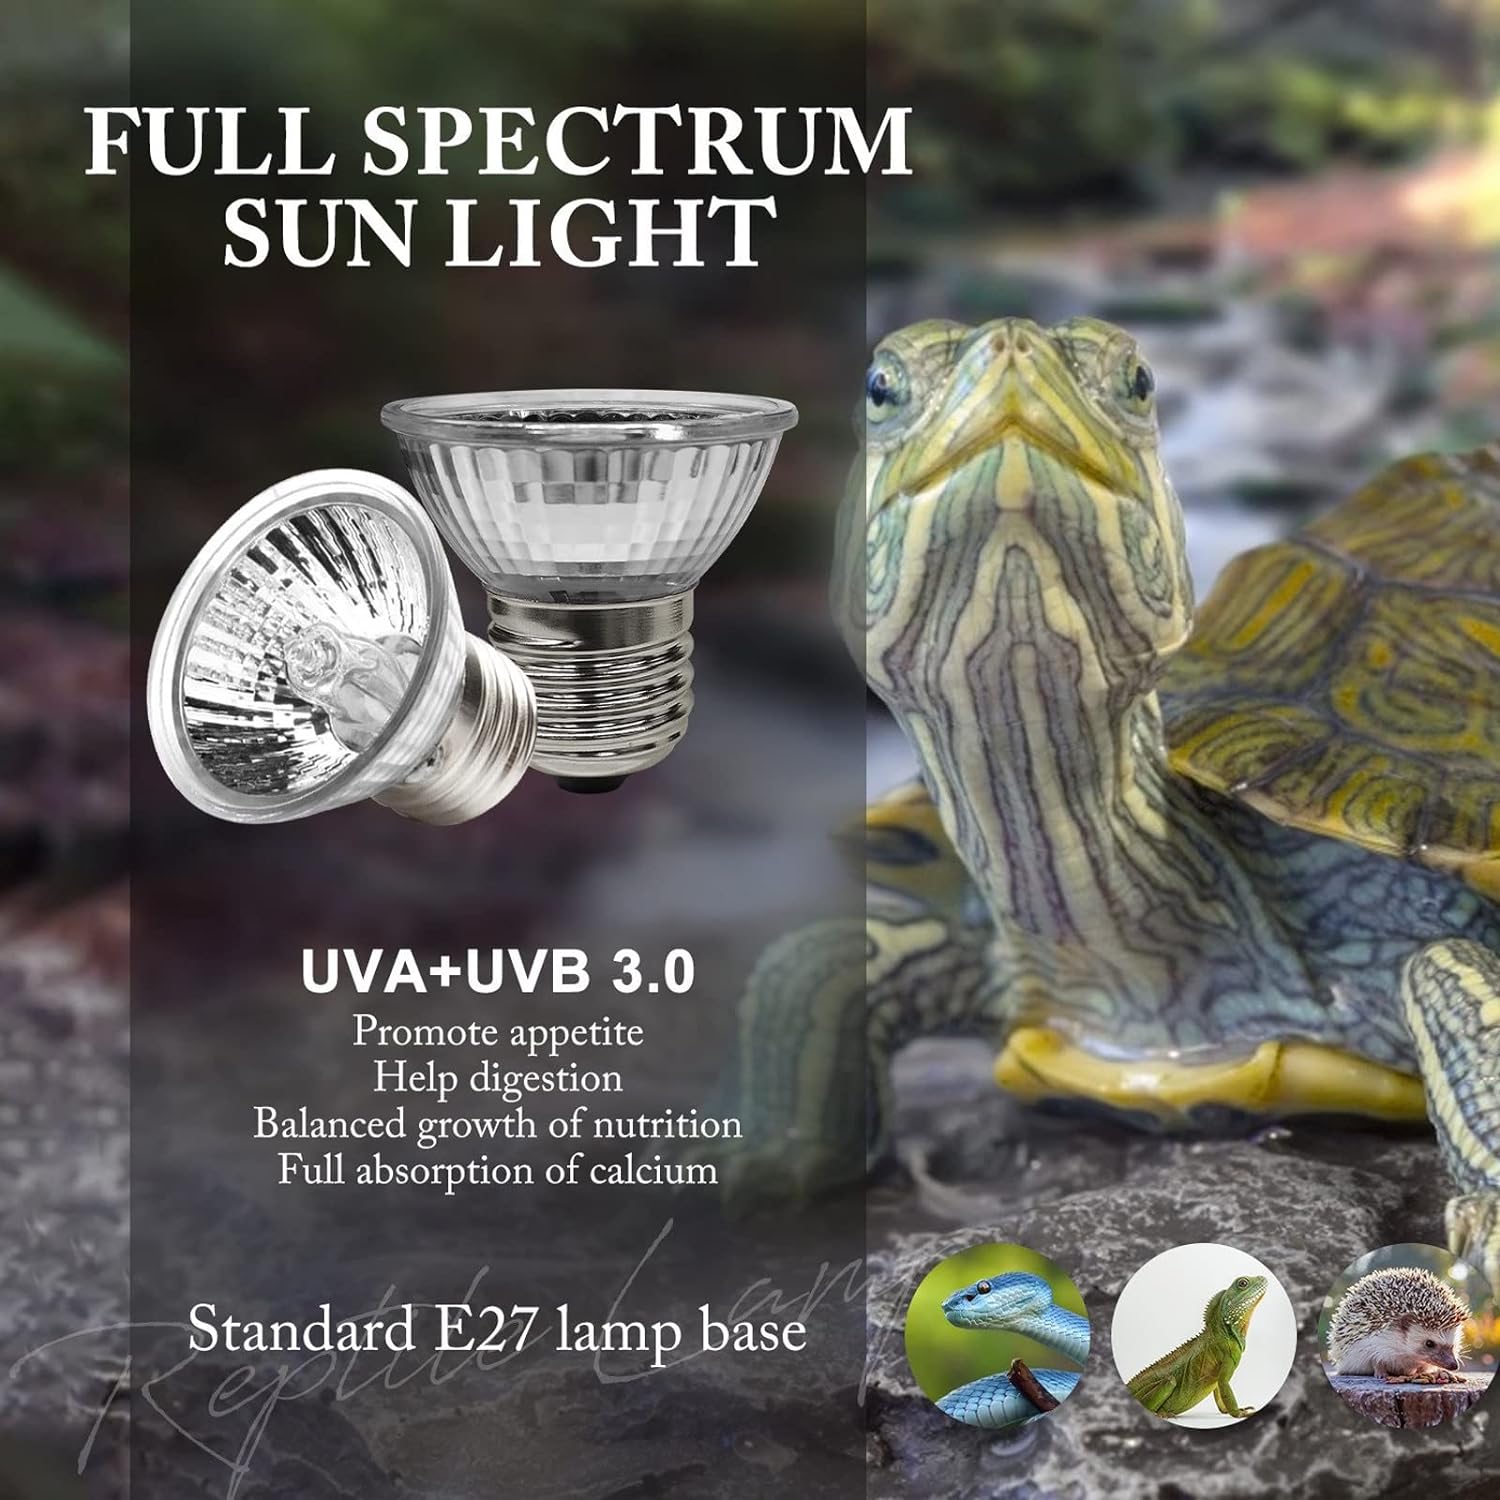 Comparing 5 Reptile Lights: Nano Combo, Heat Lamp, Moonlite Bulb, Mini Compact Fixture, and UVB Light Bulb